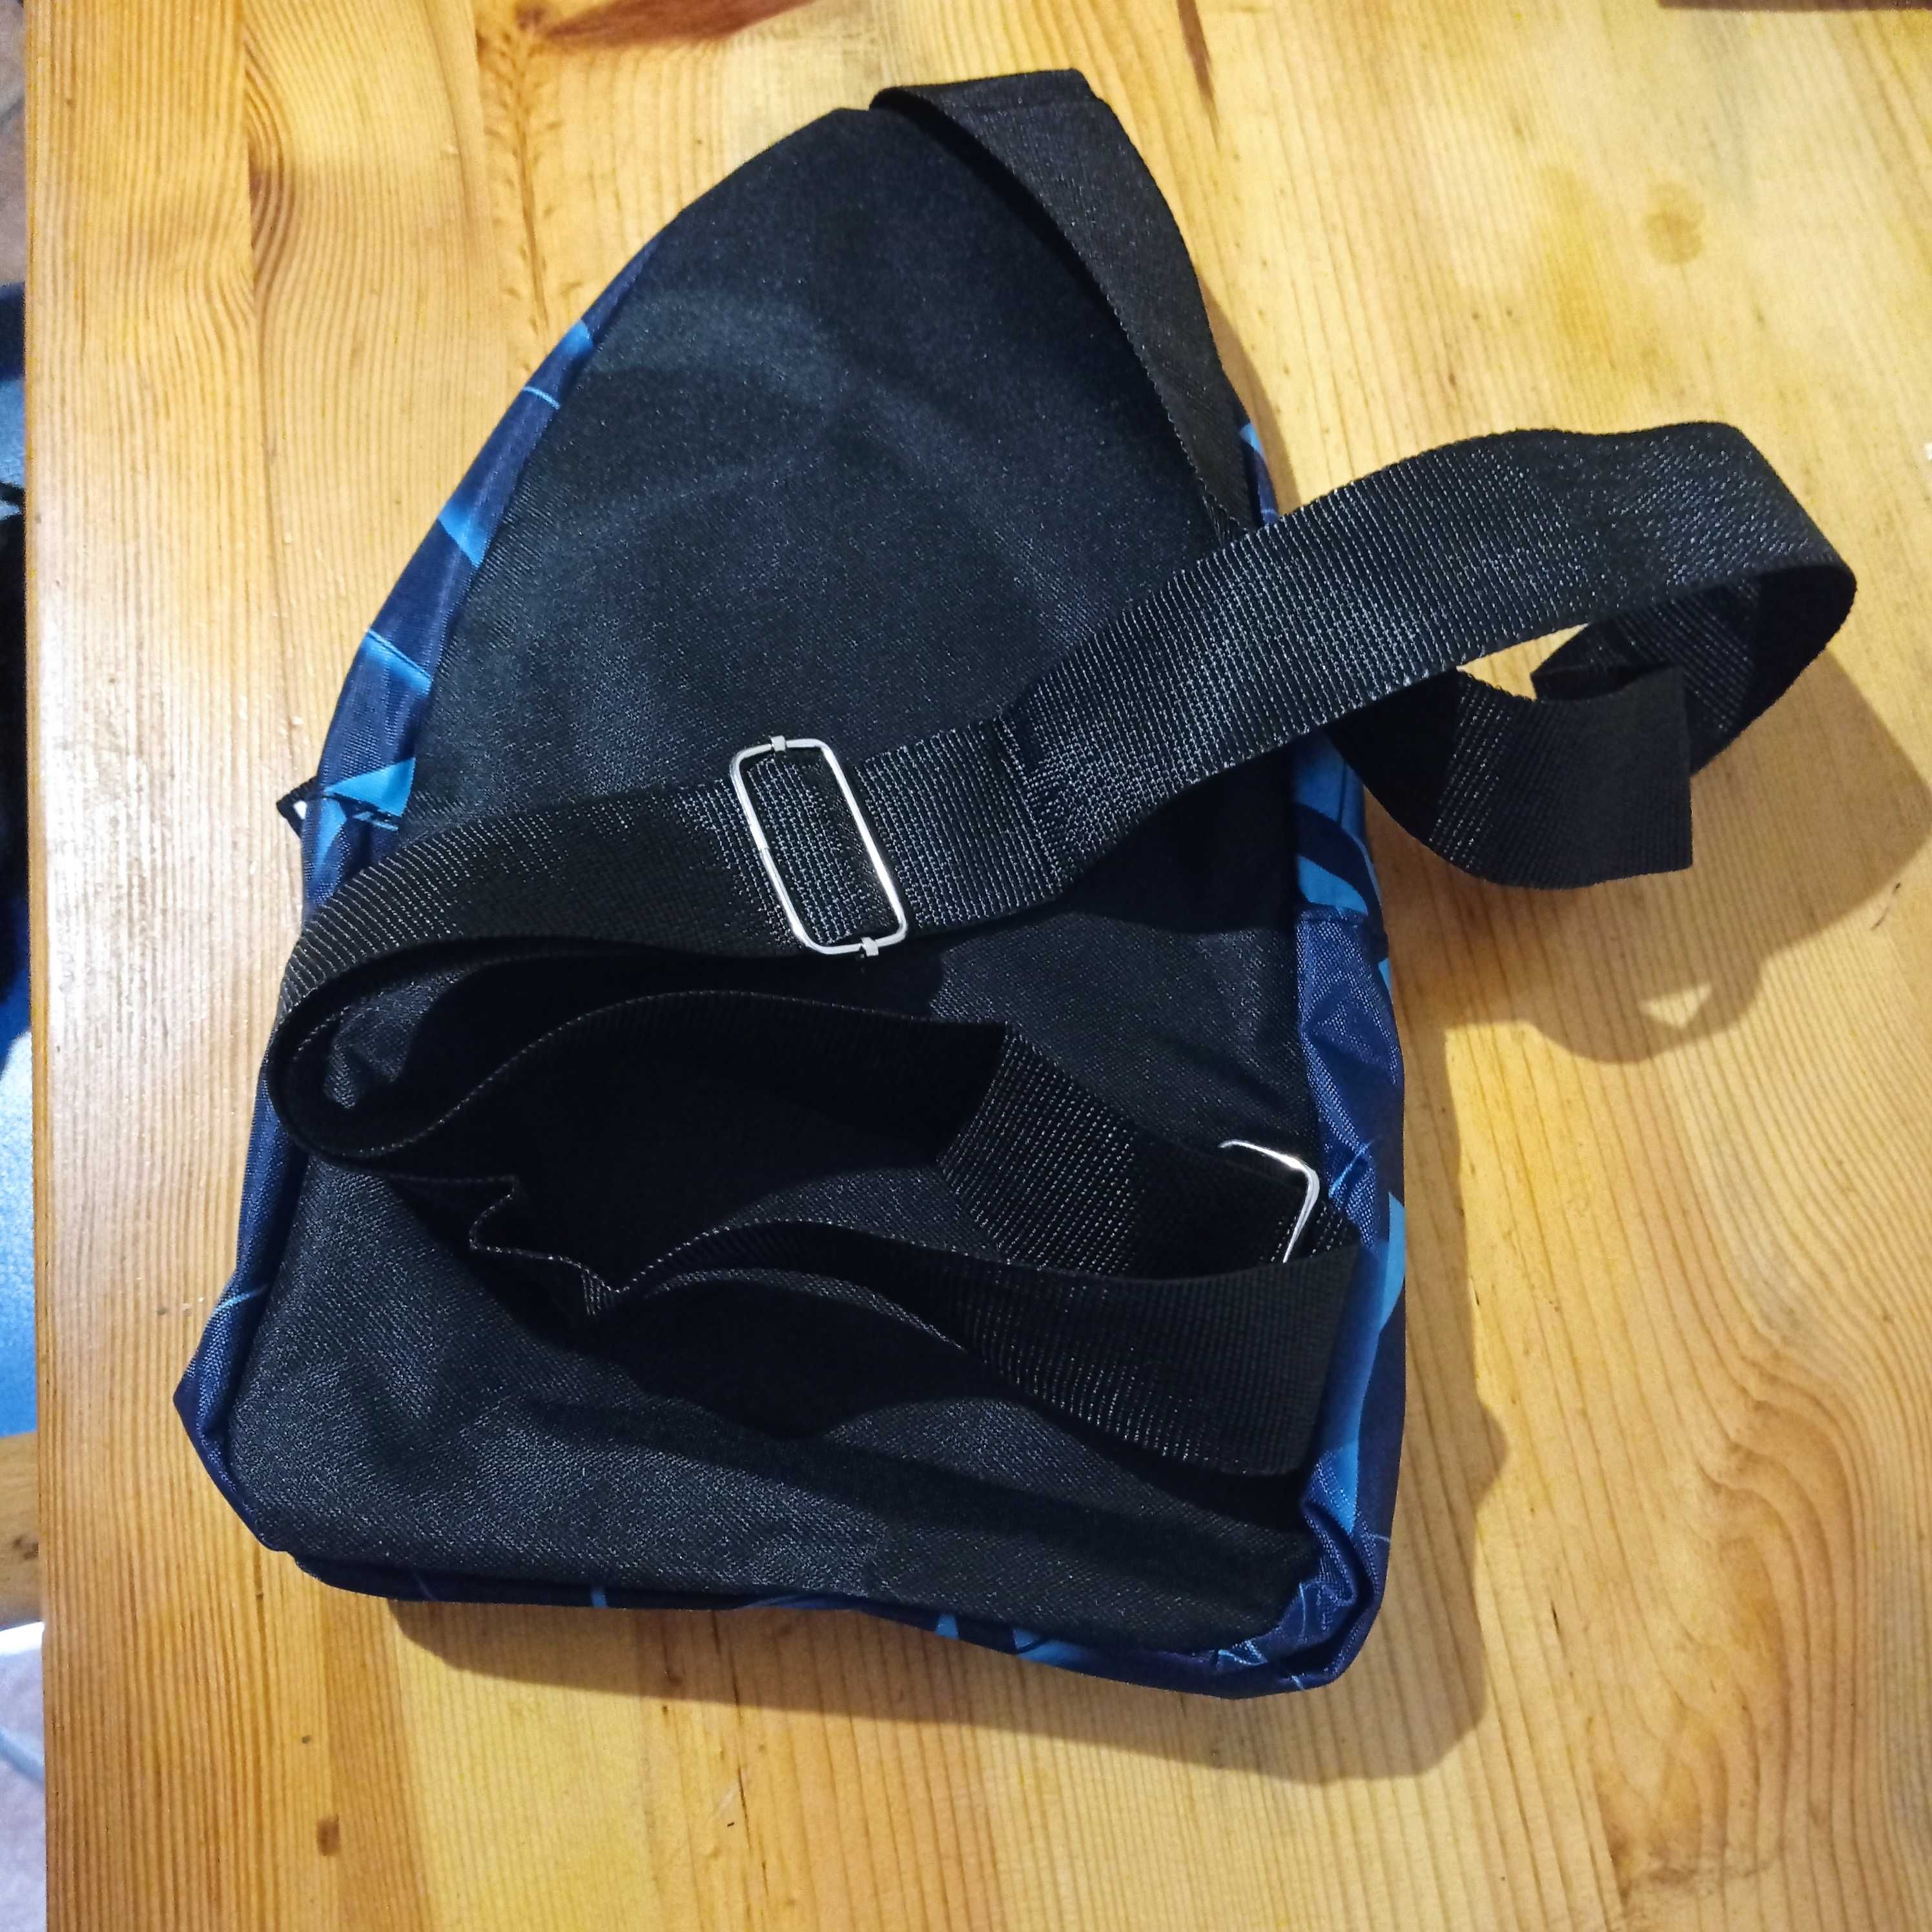 Plecak praktyczny plecaczek